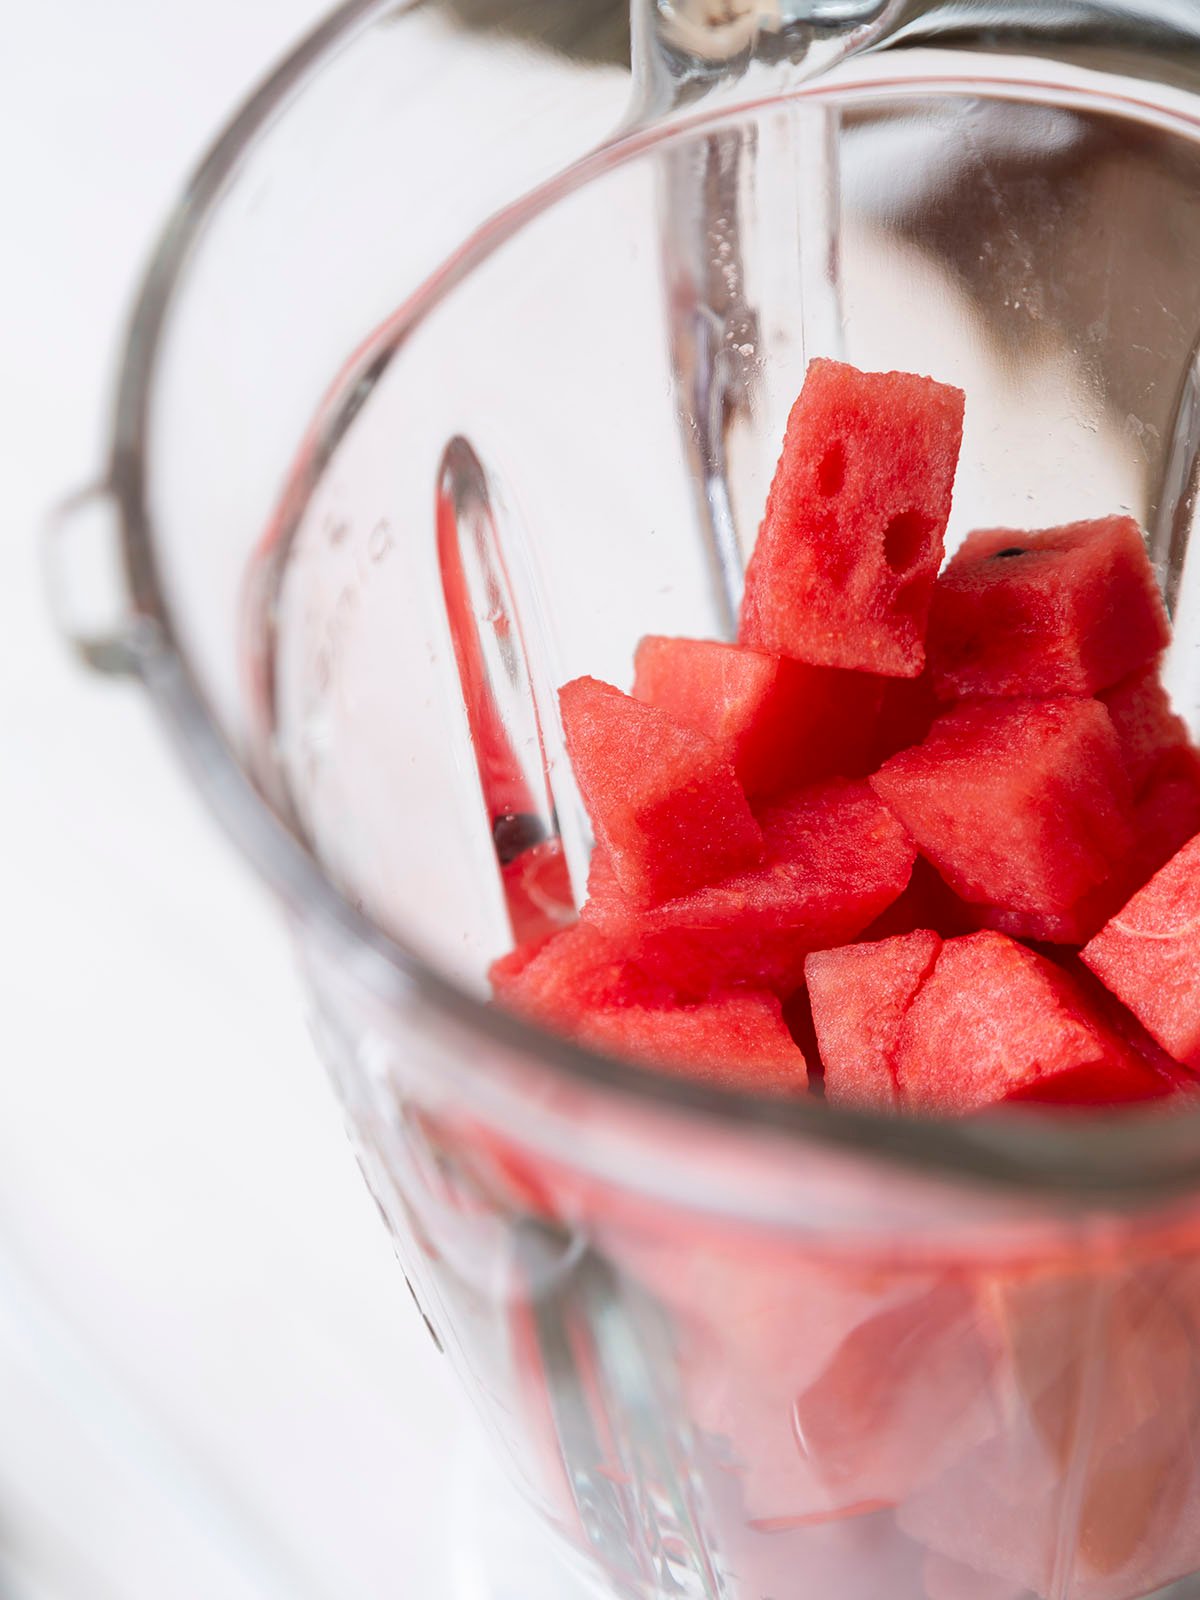 Watermelon cut in cube shape in food blender prepared for make juice.